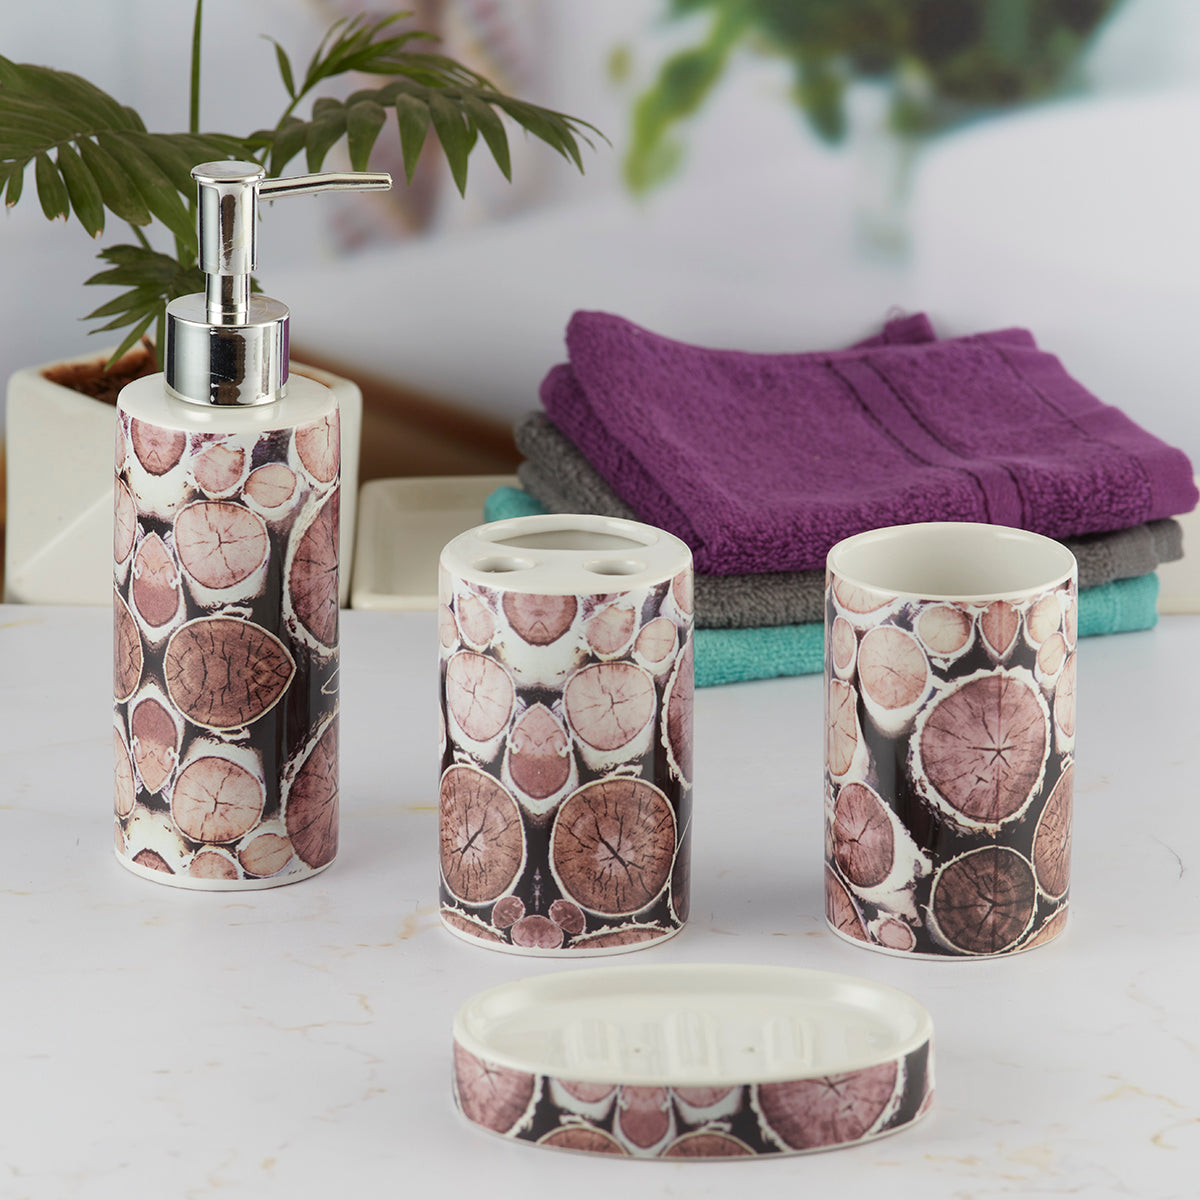 Ceramic Bathroom Accessories Set of 4 Bath Set with Soap Dispenser (8477)